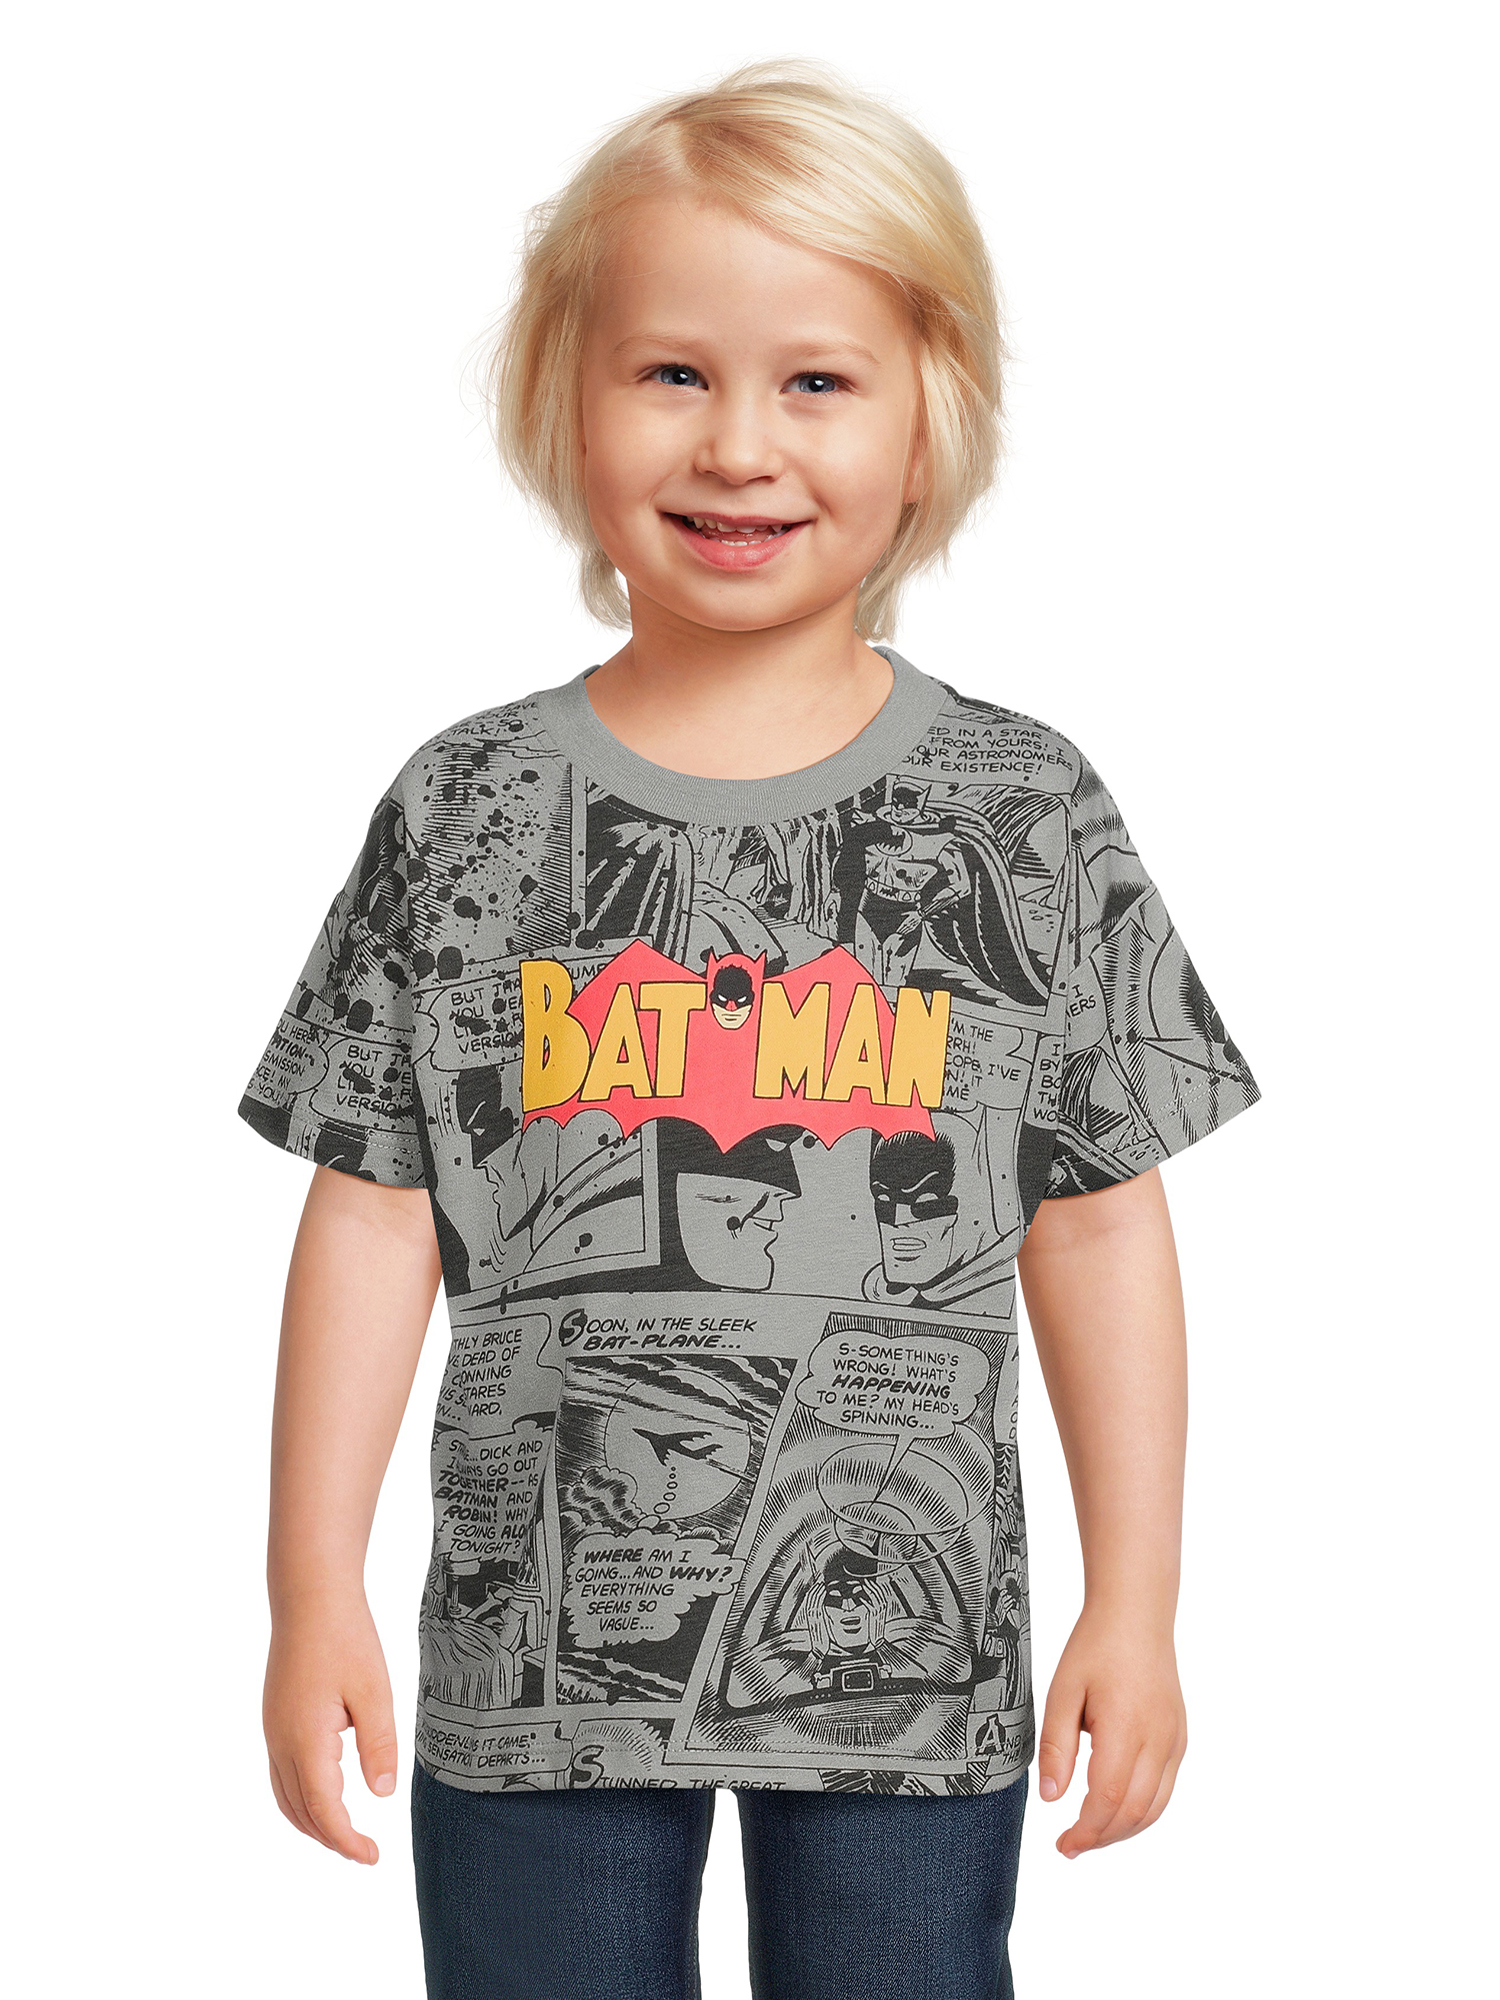 Batman Toddler Boys Comic Short Sleeve Crewneck T-Shirt, Sizes 12M-5T - image 3 of 7